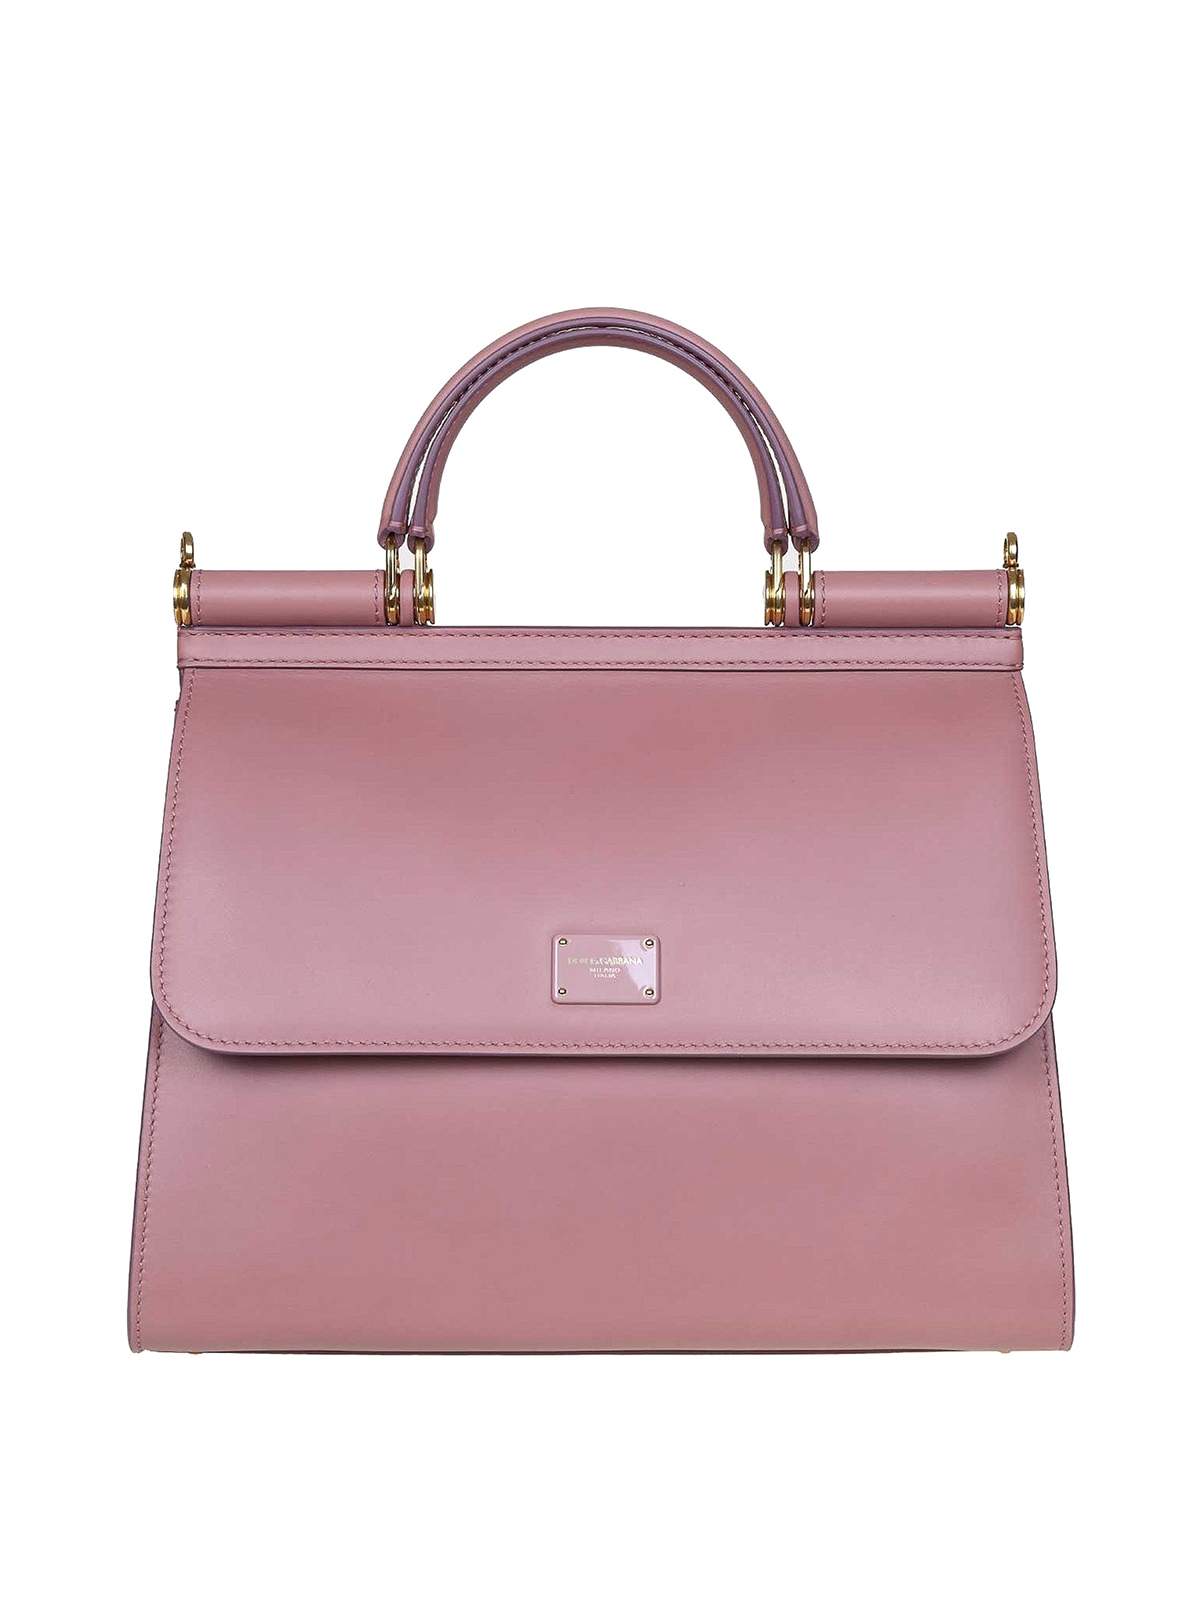 Dolce & Gabbana Large Sicily Handbag in Pink